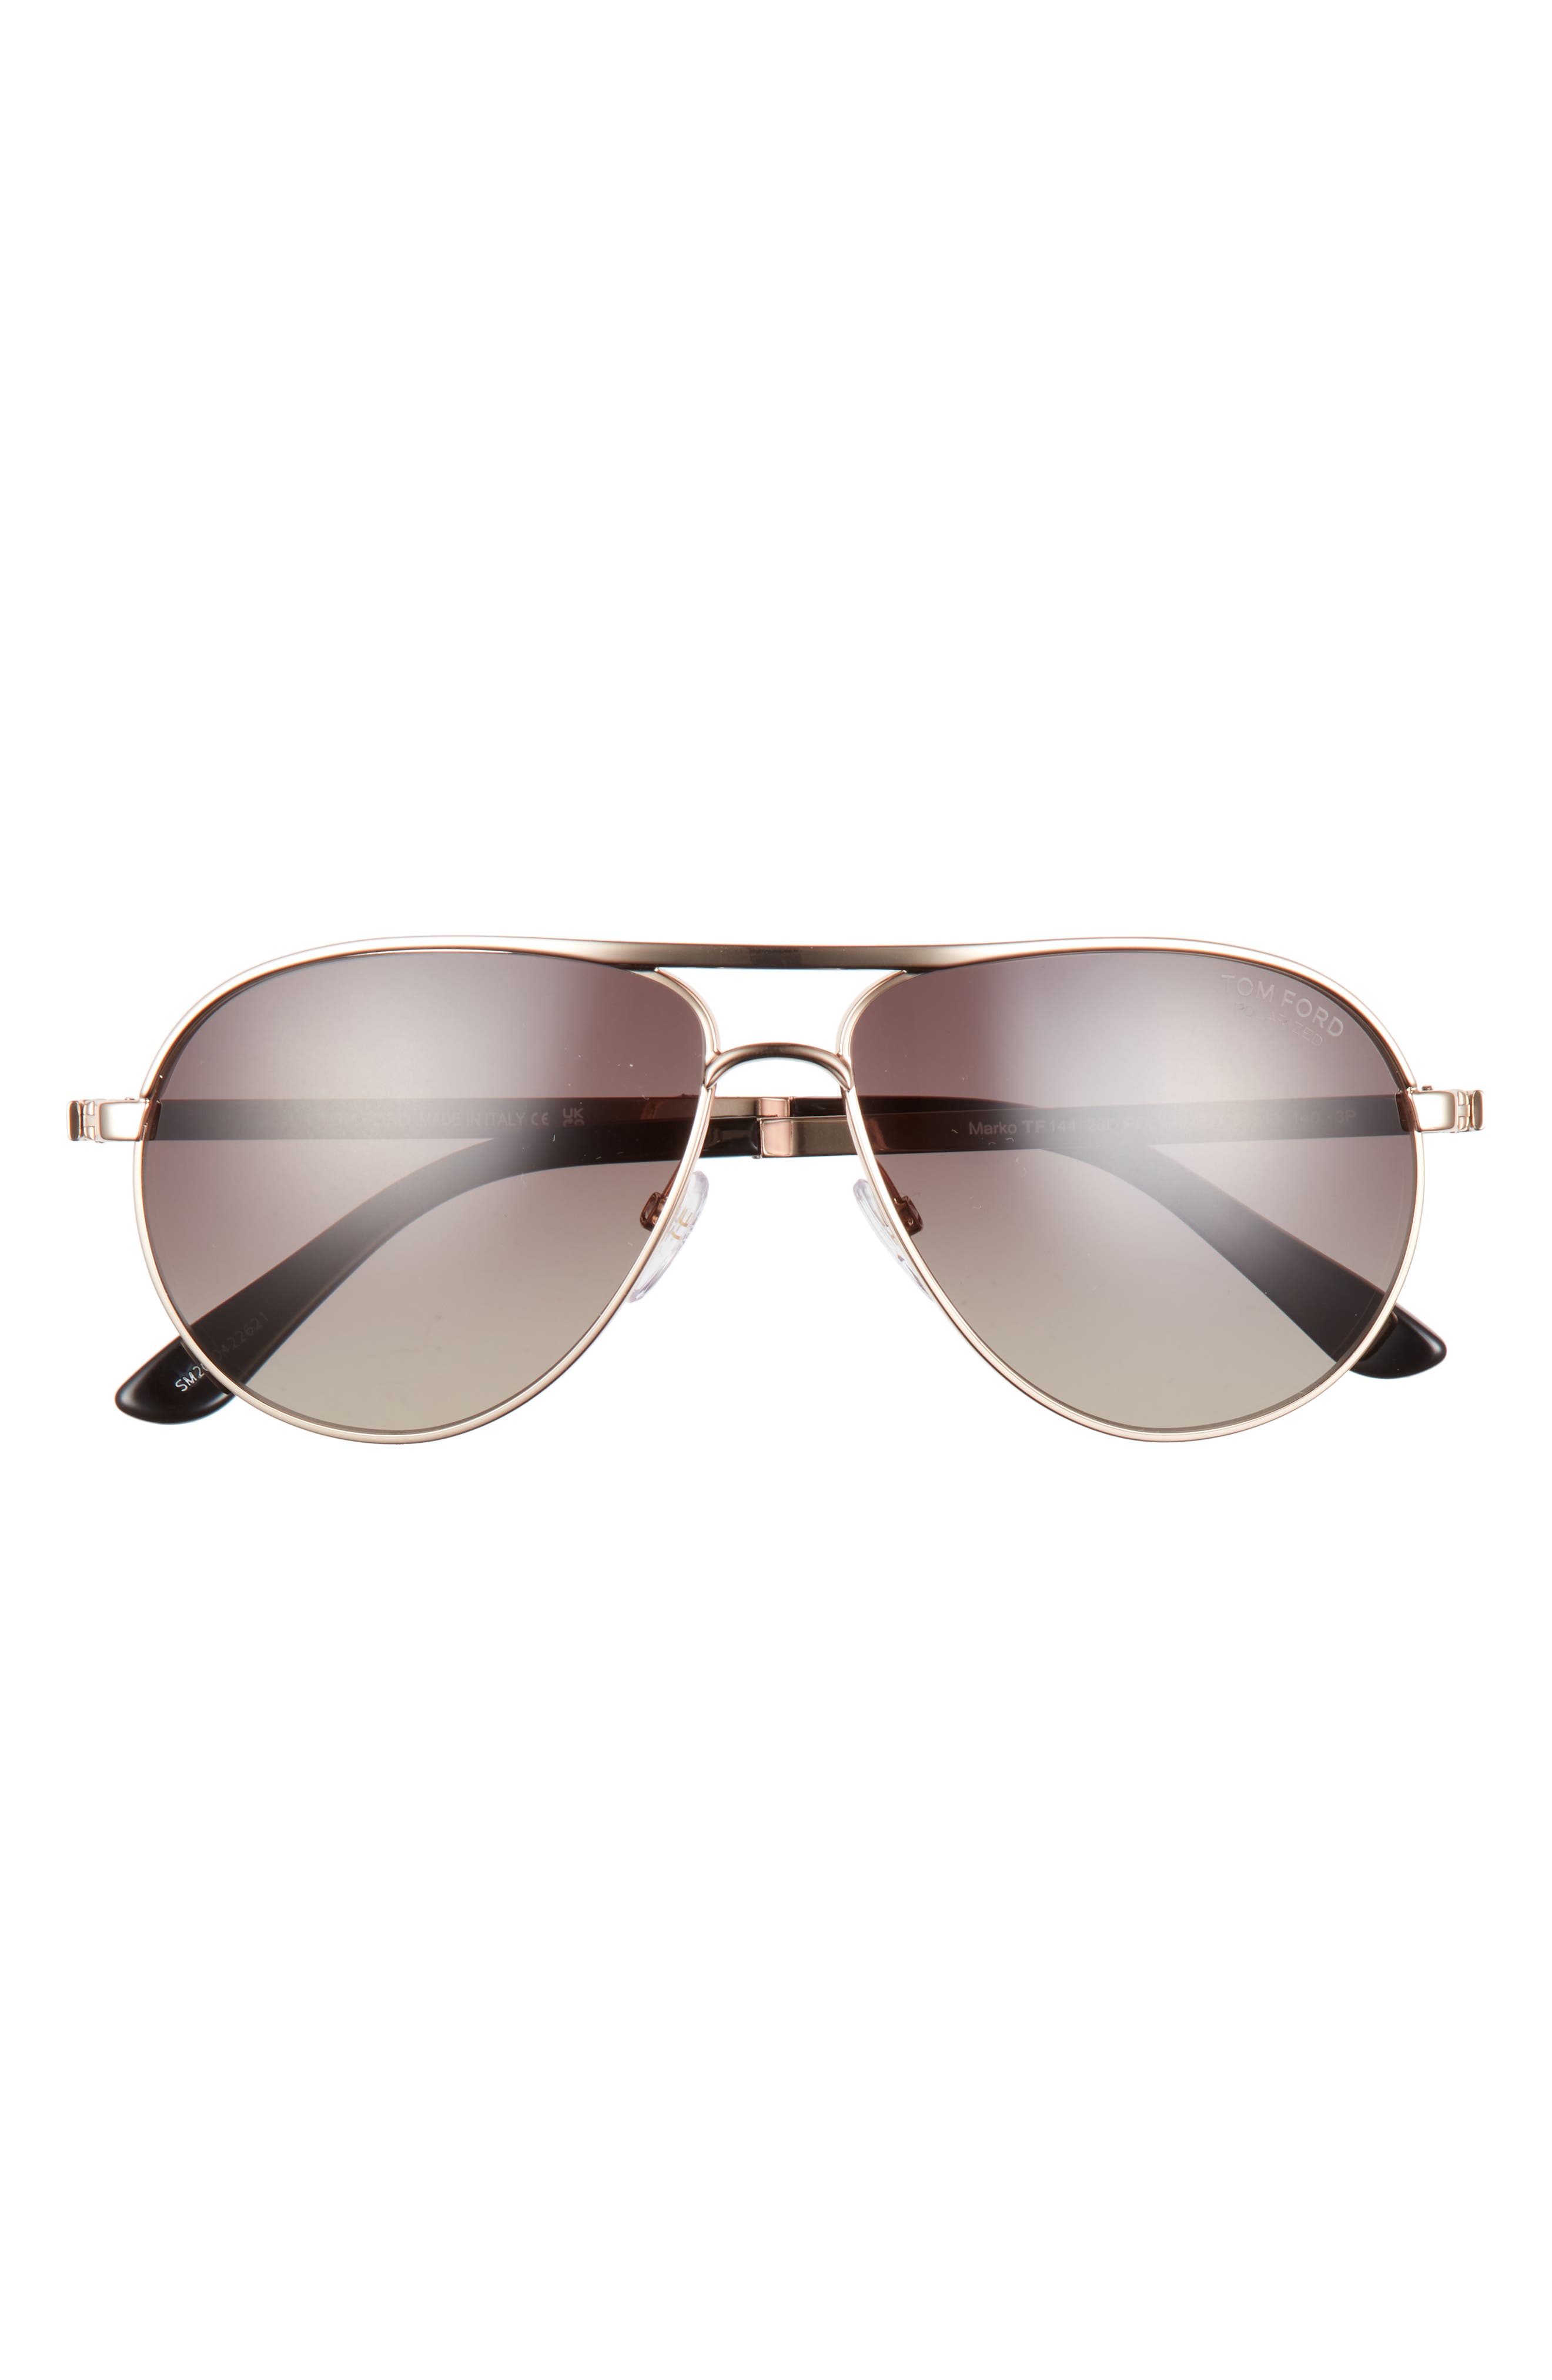 Tom Ford Marko 58mm Polarized Aviator Sunglasses in Rose Gold /Smoke Polarized